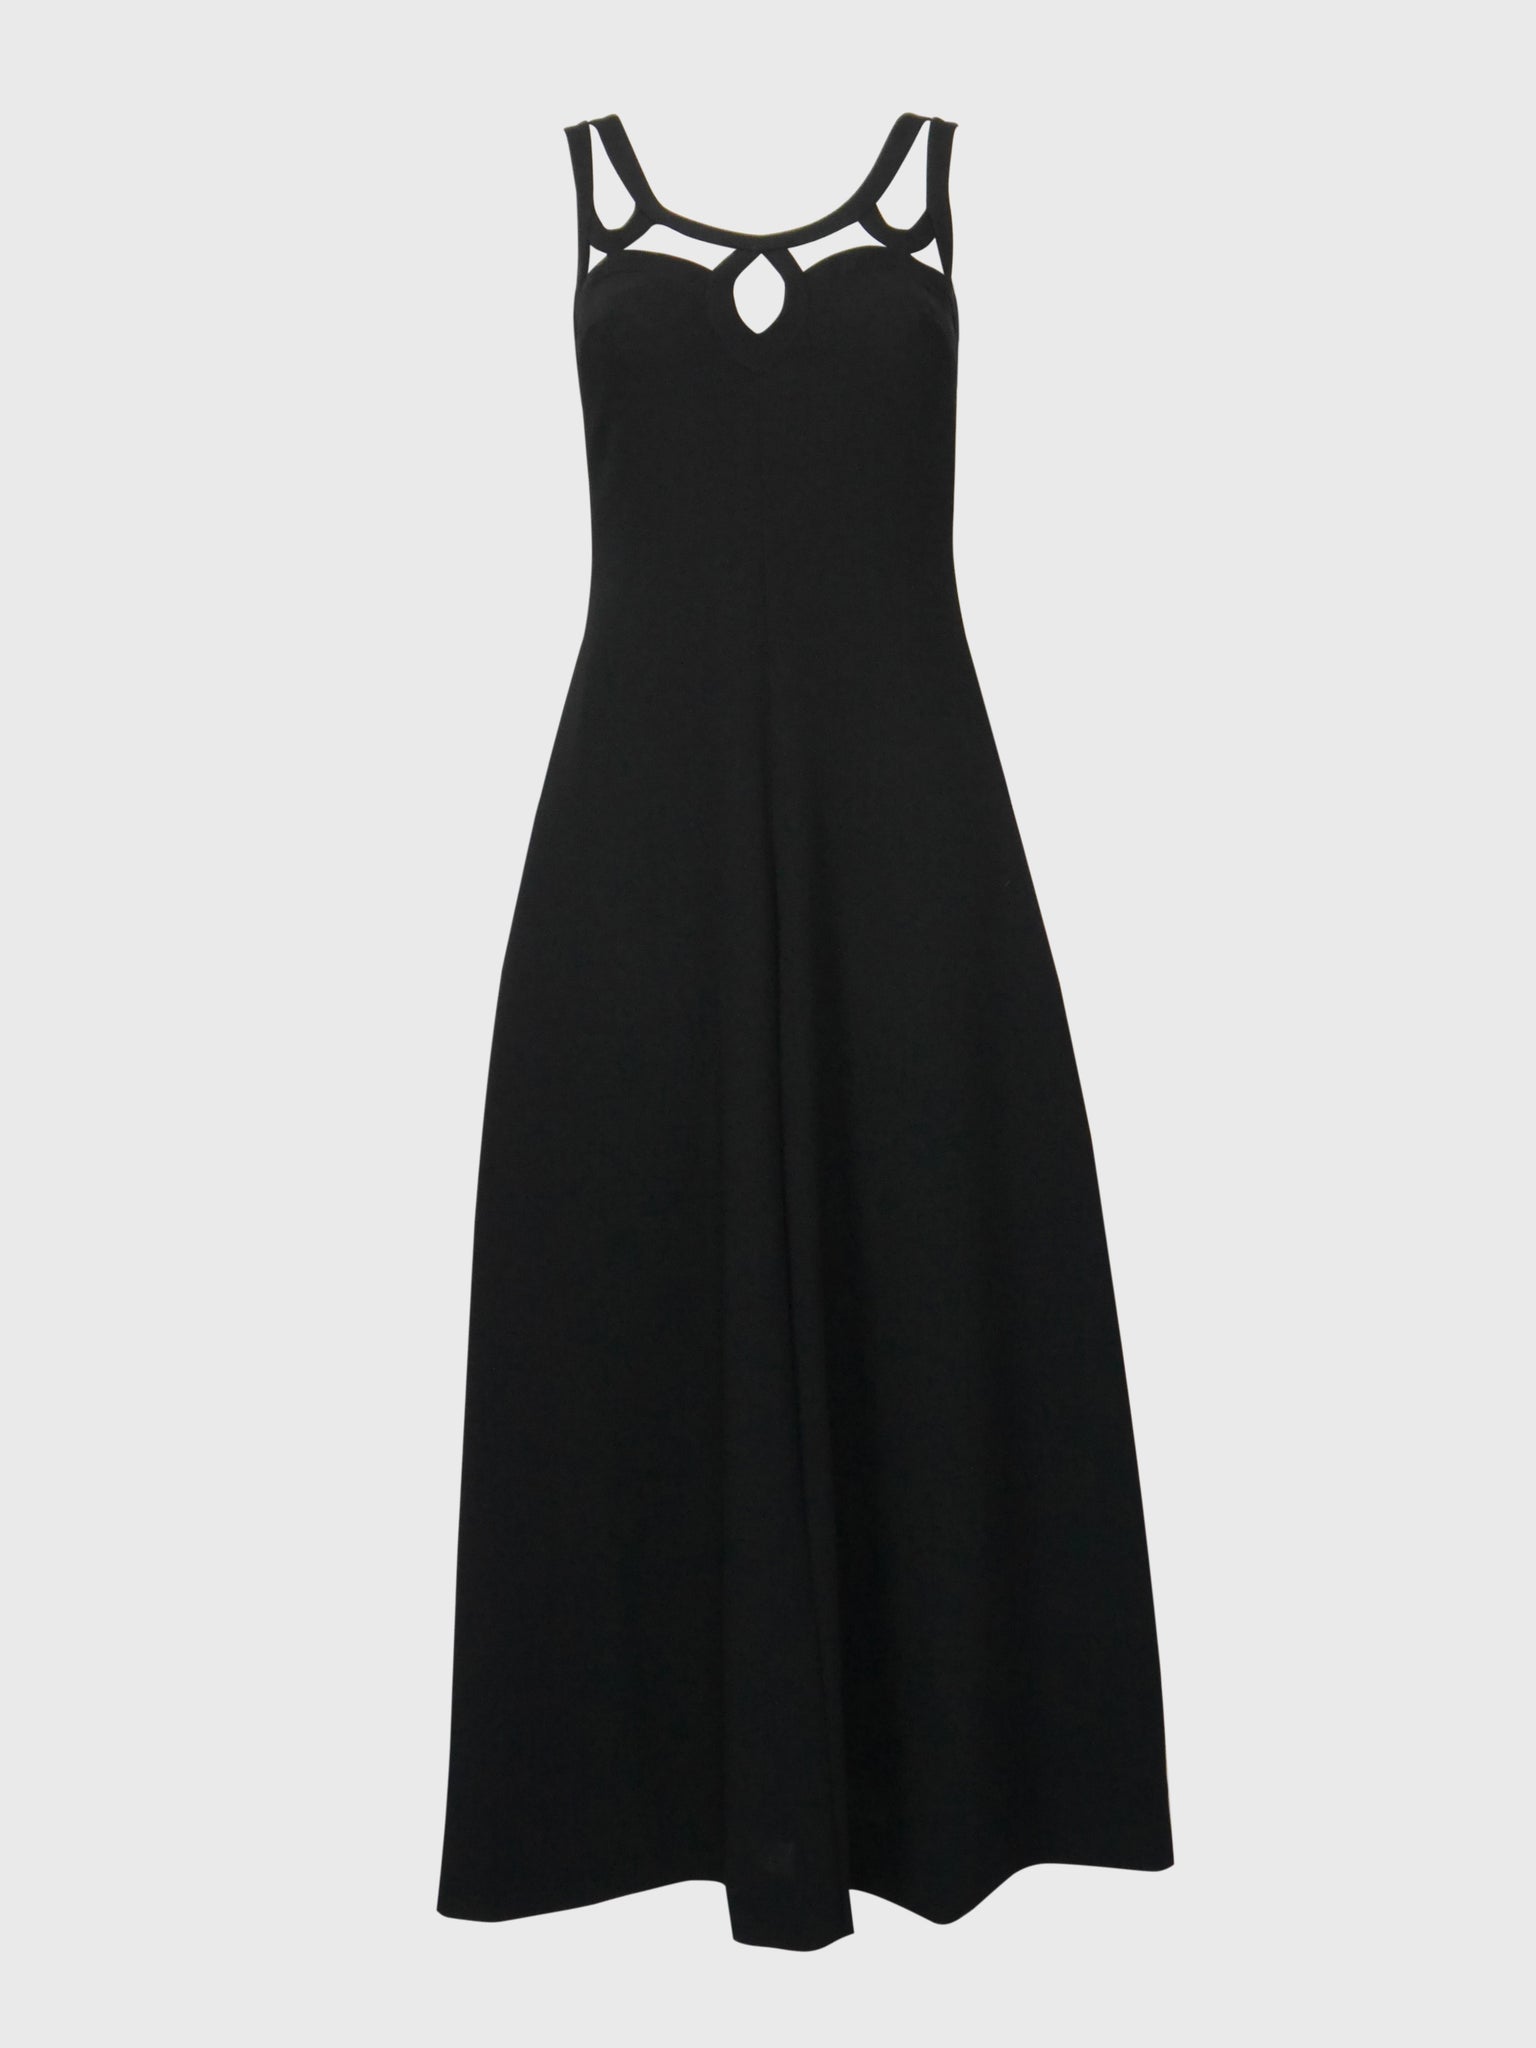 LOUIS FÉRAUD 1960s 1970s Vintage Black Maxi Dress w/ Openwork Neckline Size XXS-XS